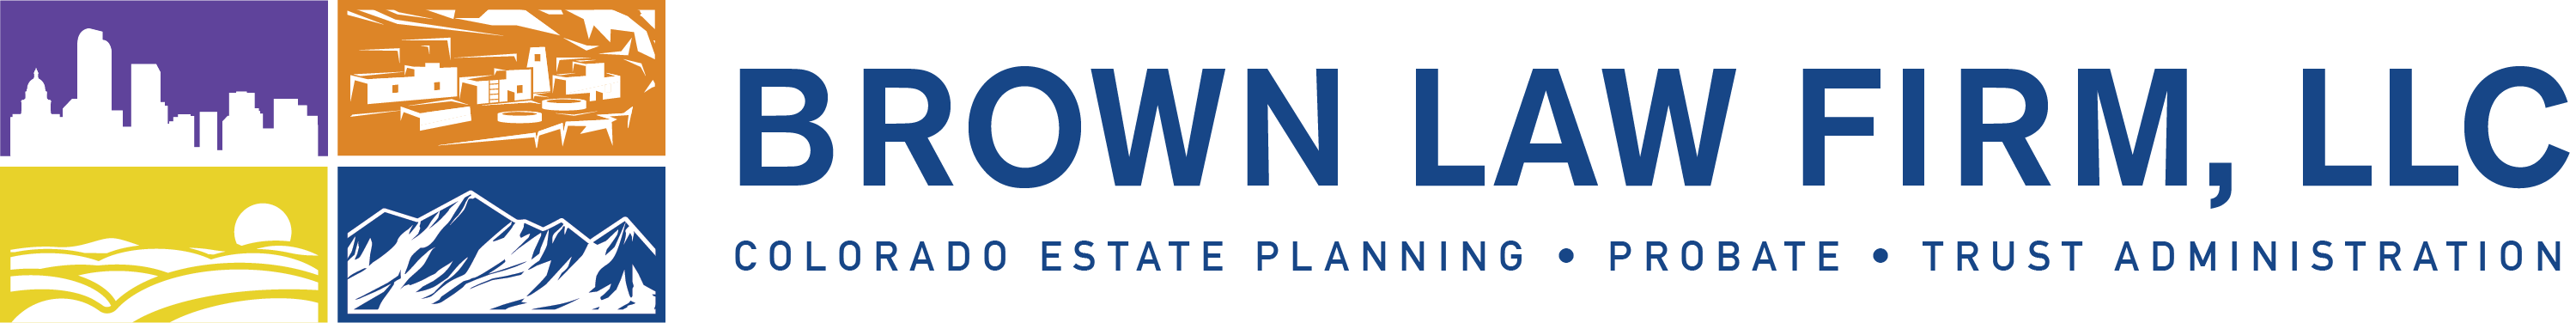 Brown Law Firm LLC Logo